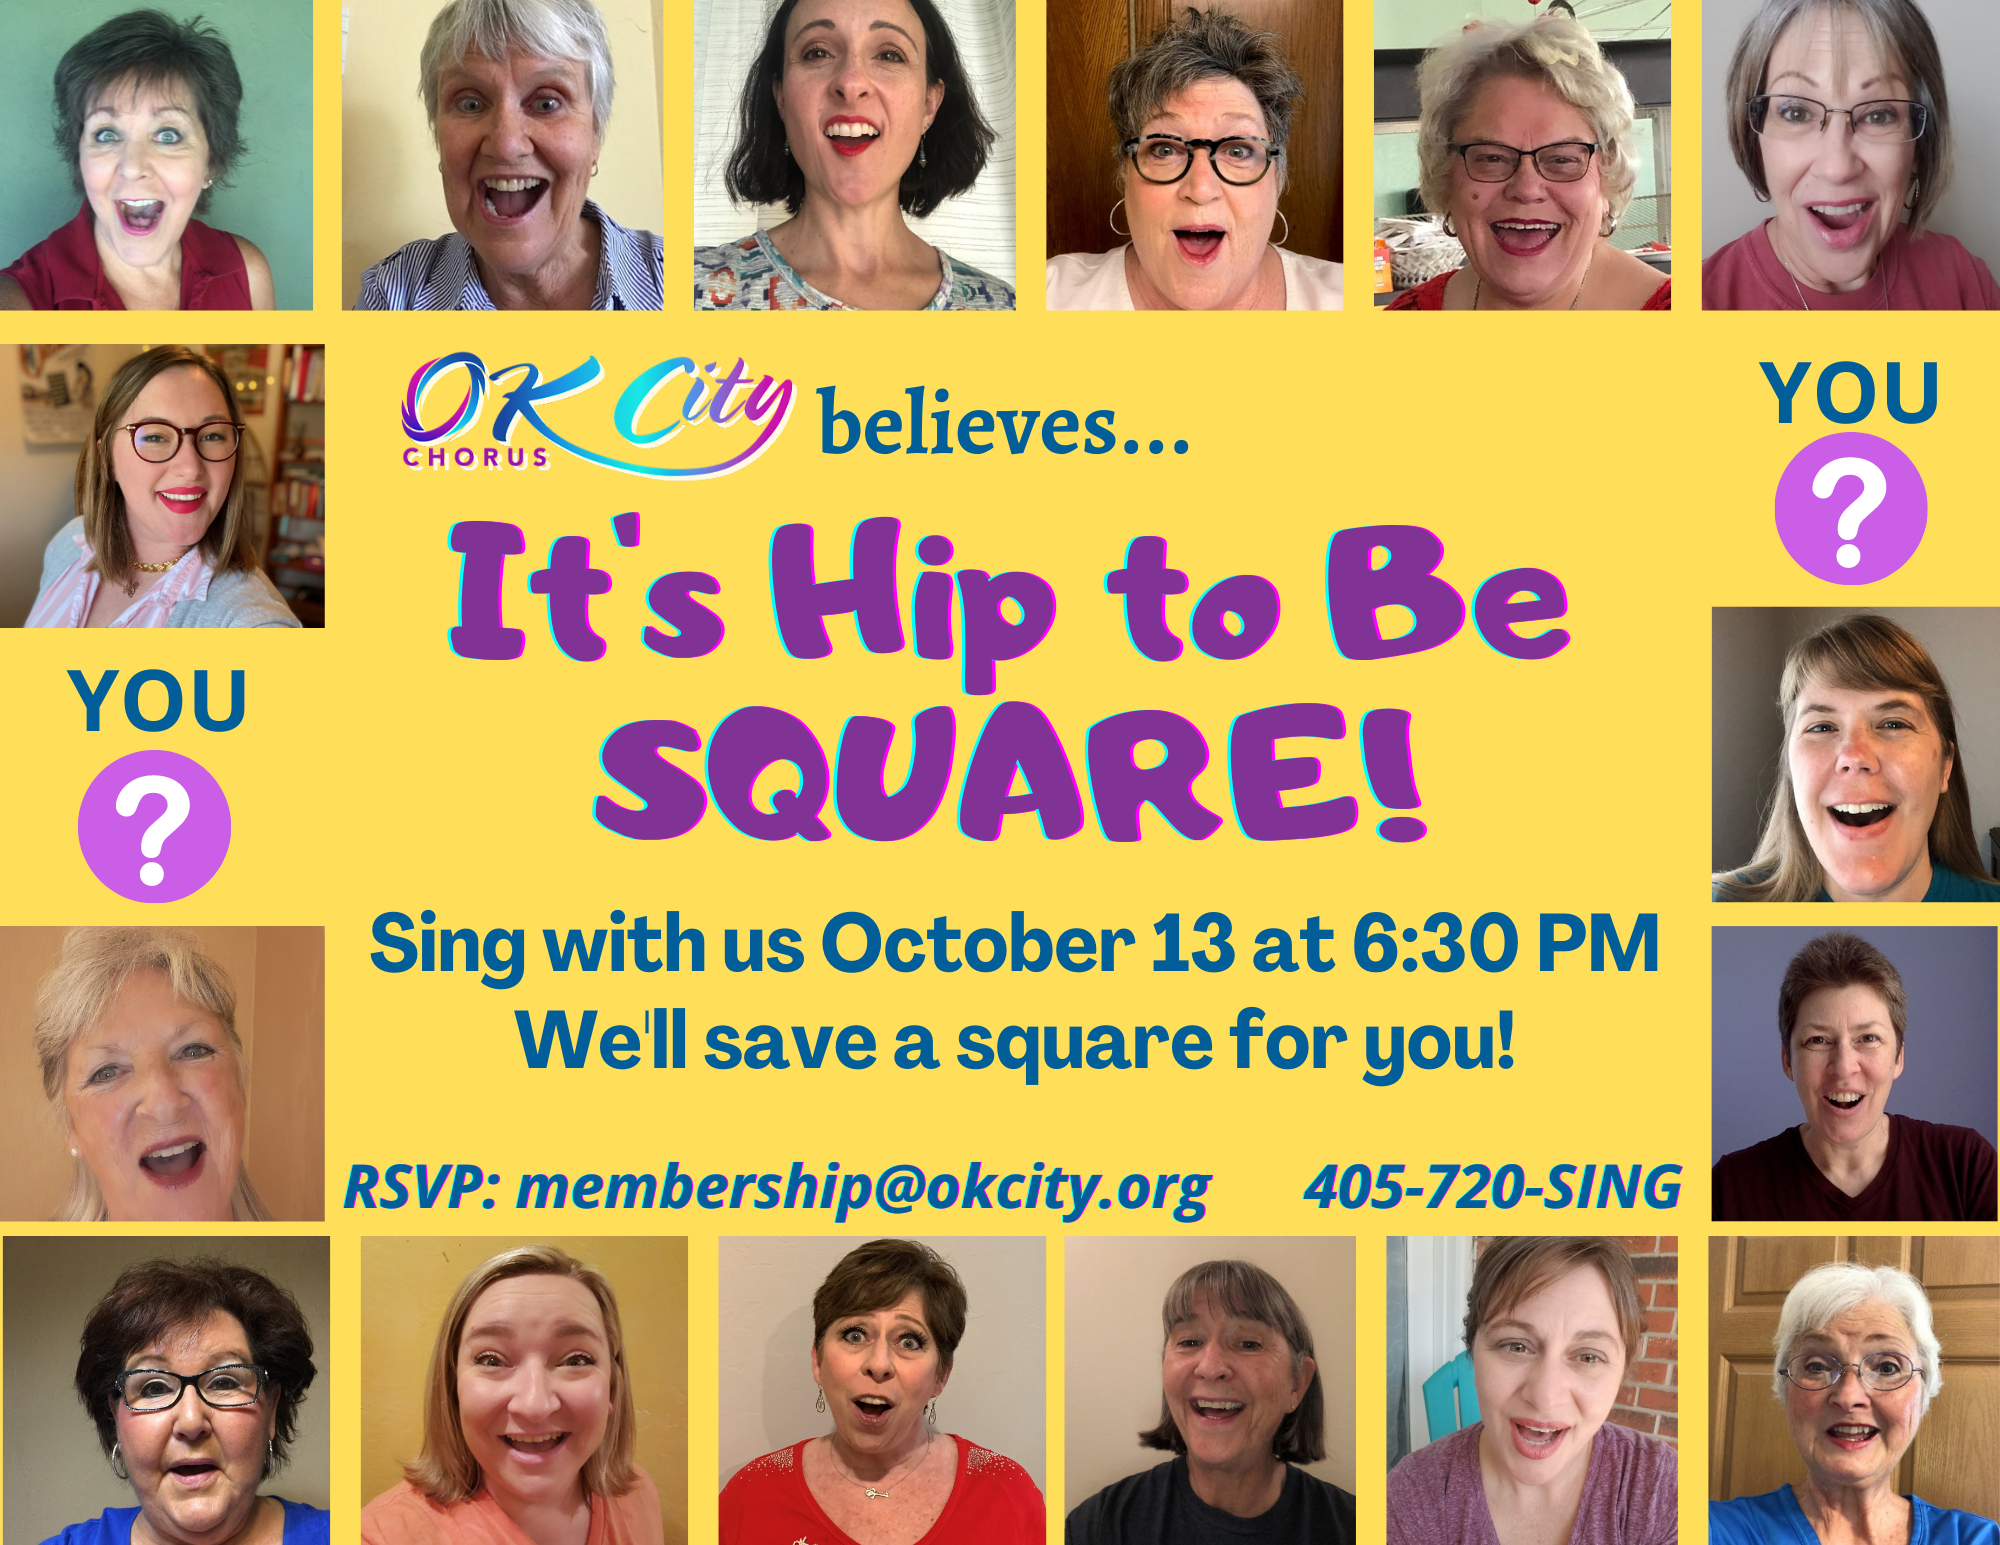 It's Hip to Be Square - OK City Chorus Virtual Open House